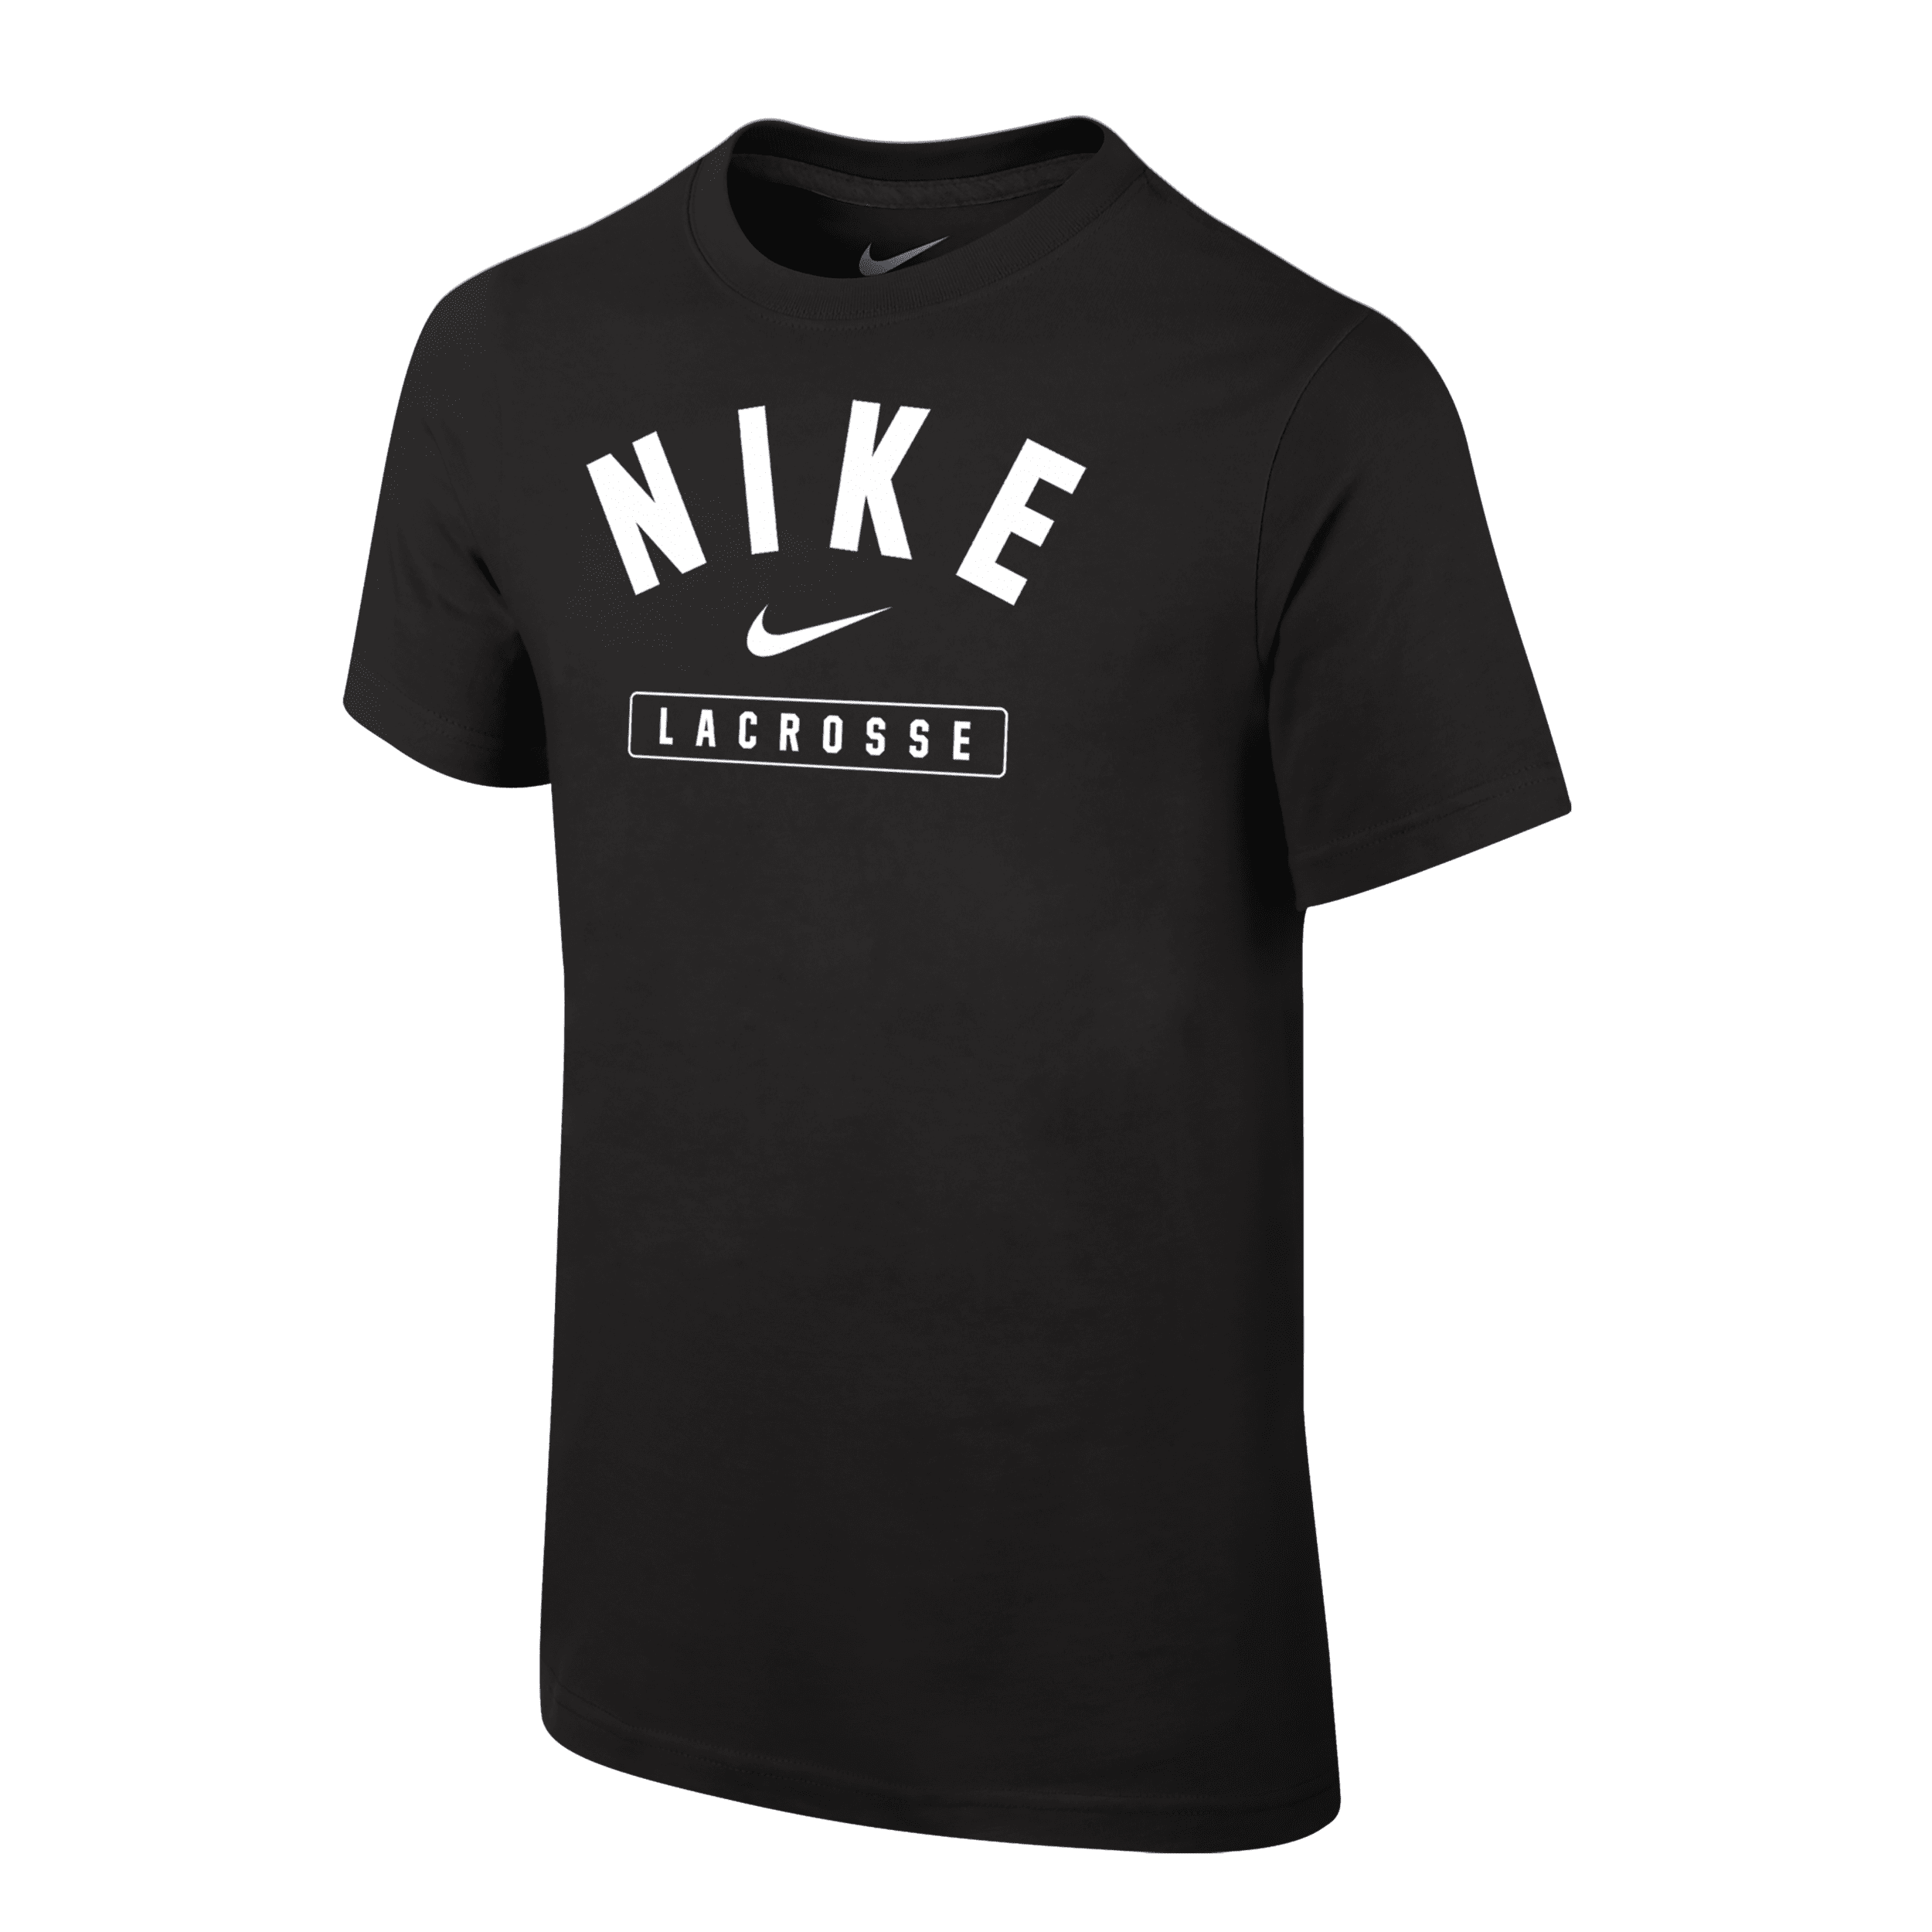 Nike Lacrosse Big Kids' (boys') T-shirt In Black